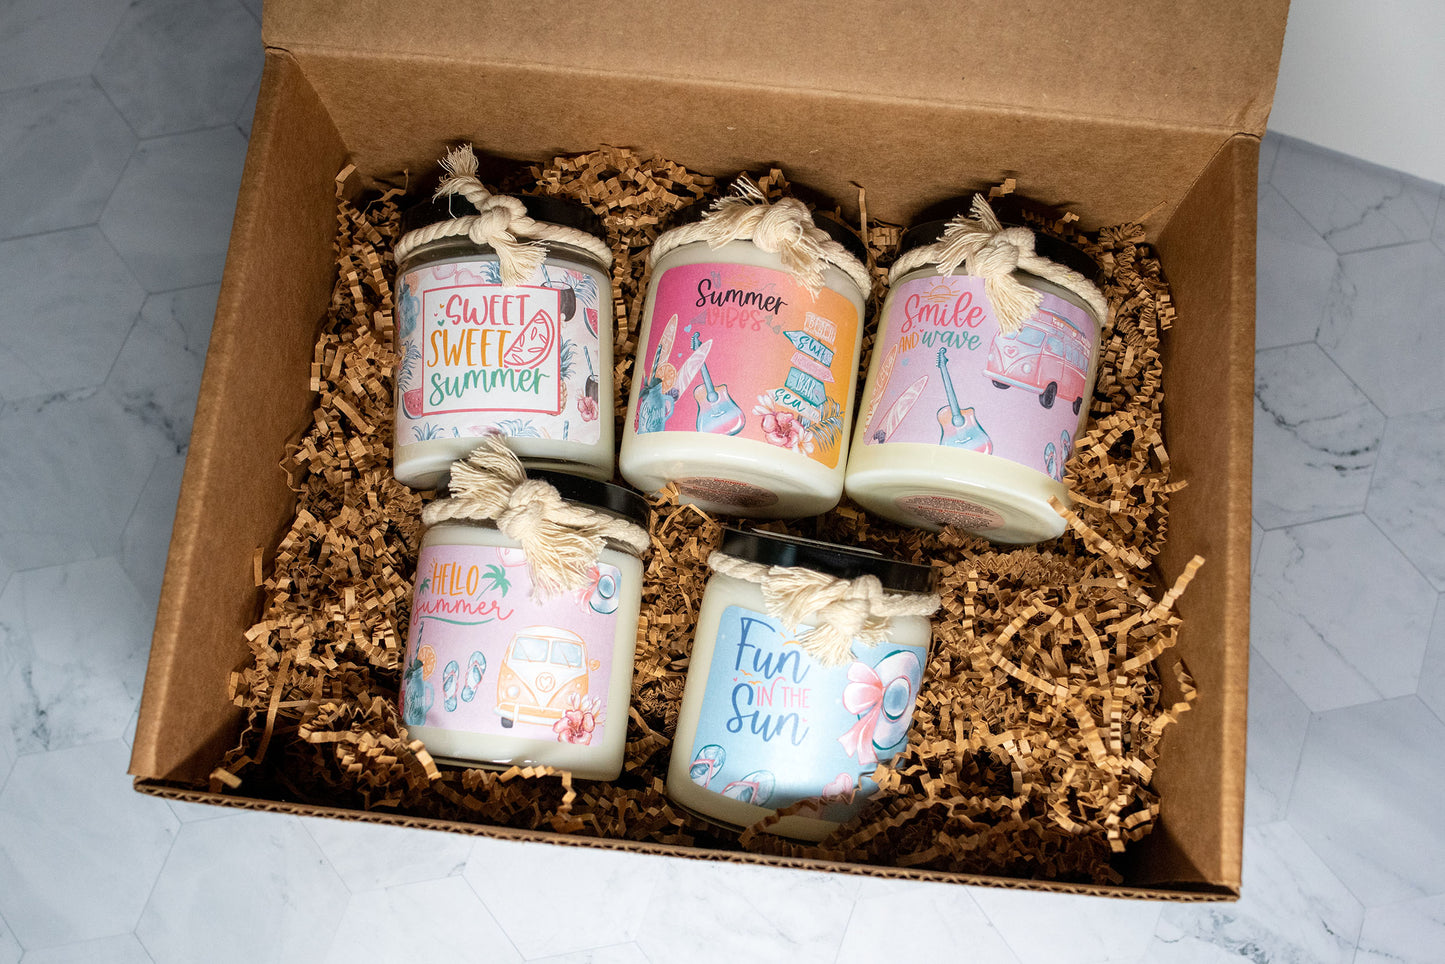 BUNDLE -  Summer Sensation Bundle Box - Jar candles (5 total)